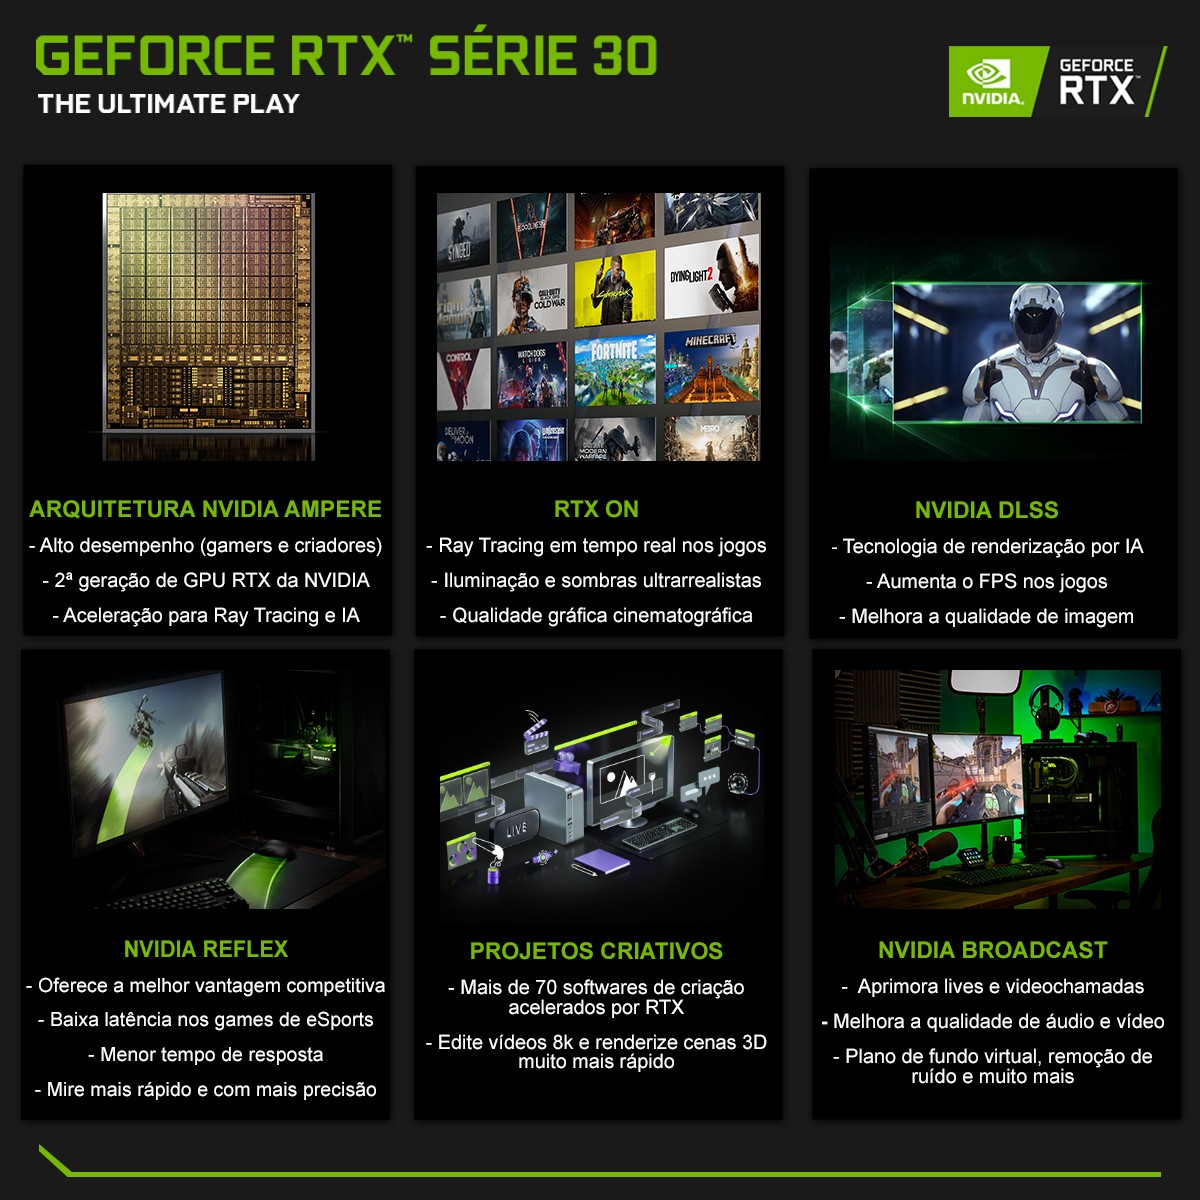 Placa de Vídeo Colorful GeForce RTX 3060 Ti NB DUO, LHR, 8GB, GDDR6, DLSS, Ray Tracing